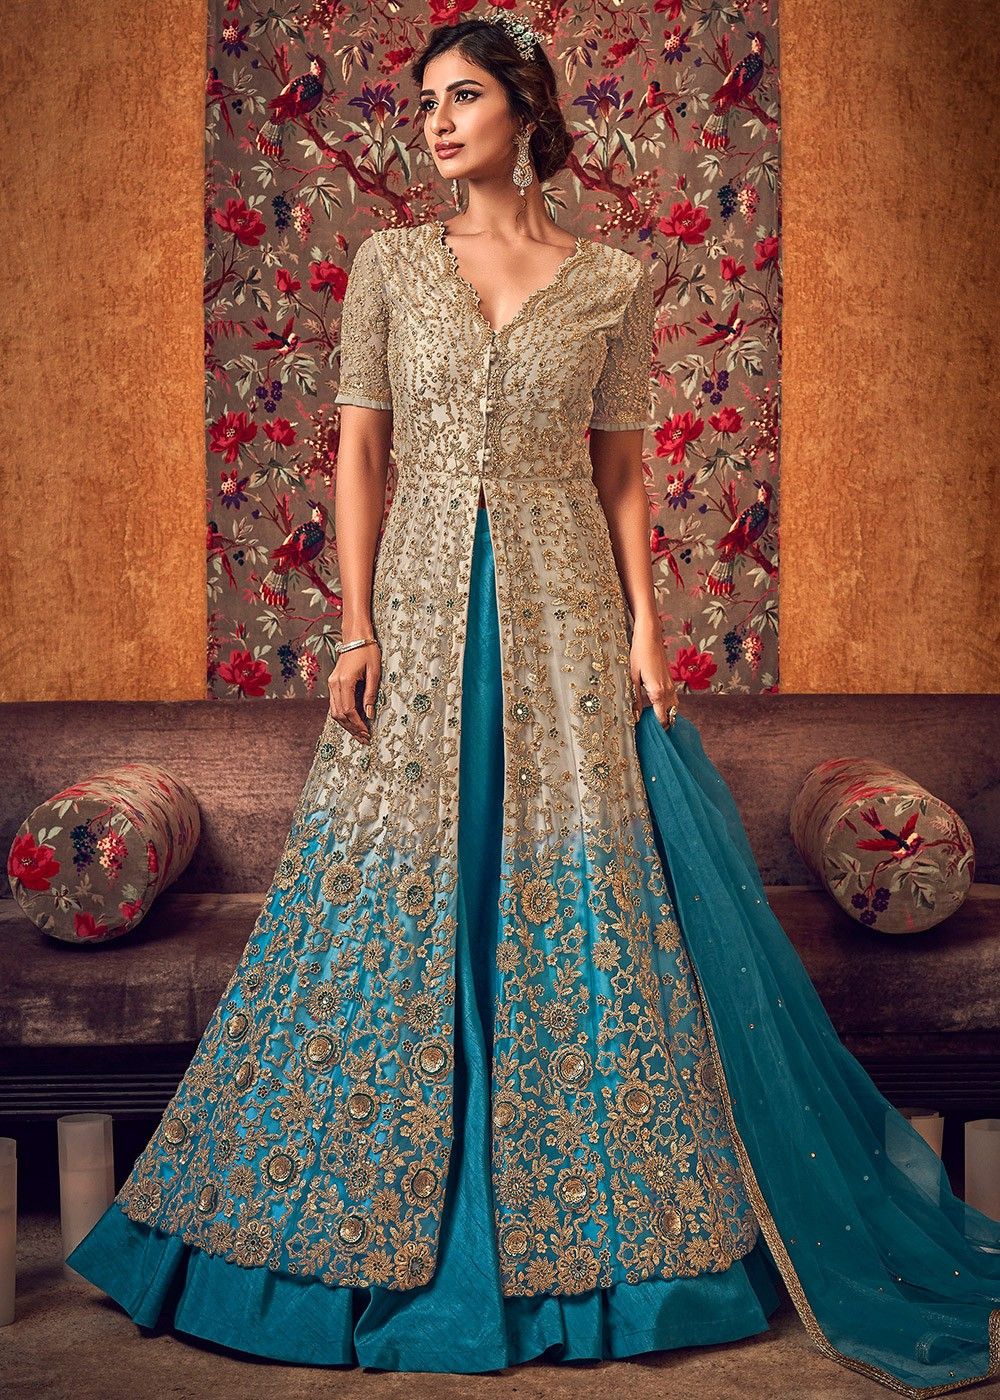 Moomaya A-Line Kurtis For Women Printed  Long Kurti Dress Indian Top For Women | Walmart Canada